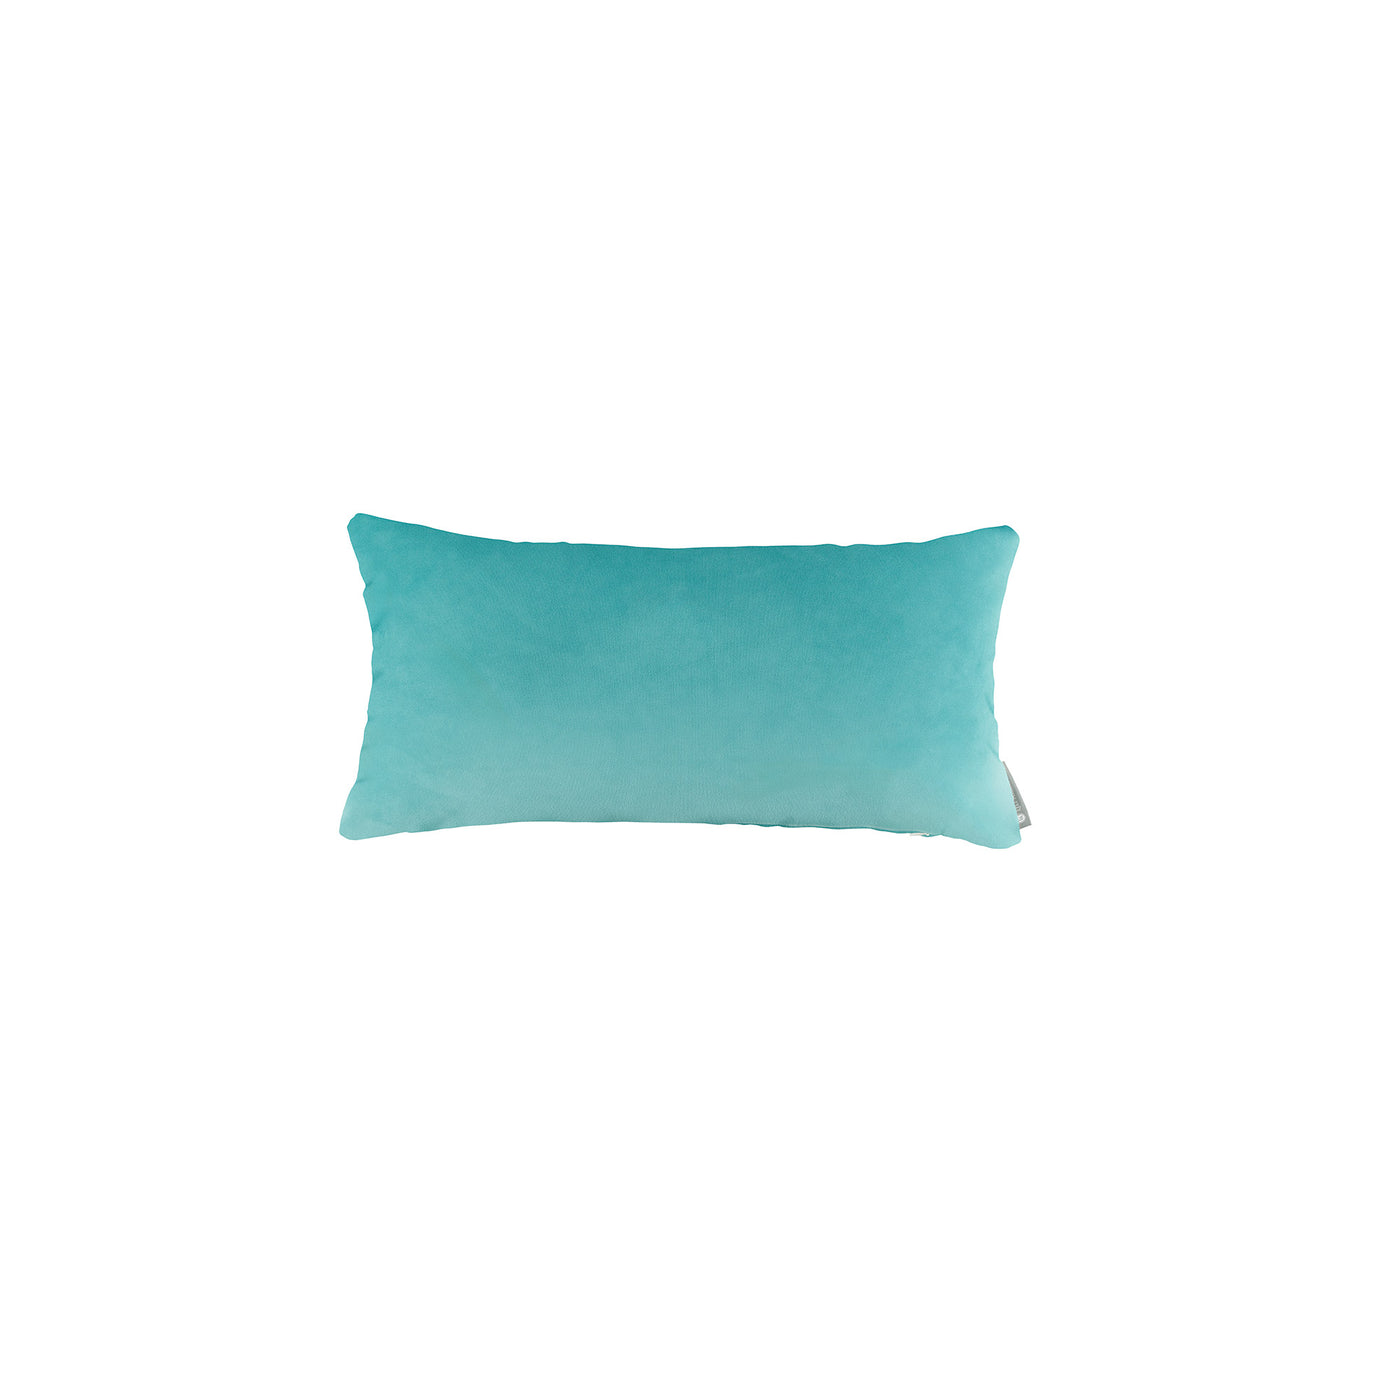 Vivid Bluebox Small Rectangle Pillow (12x24)